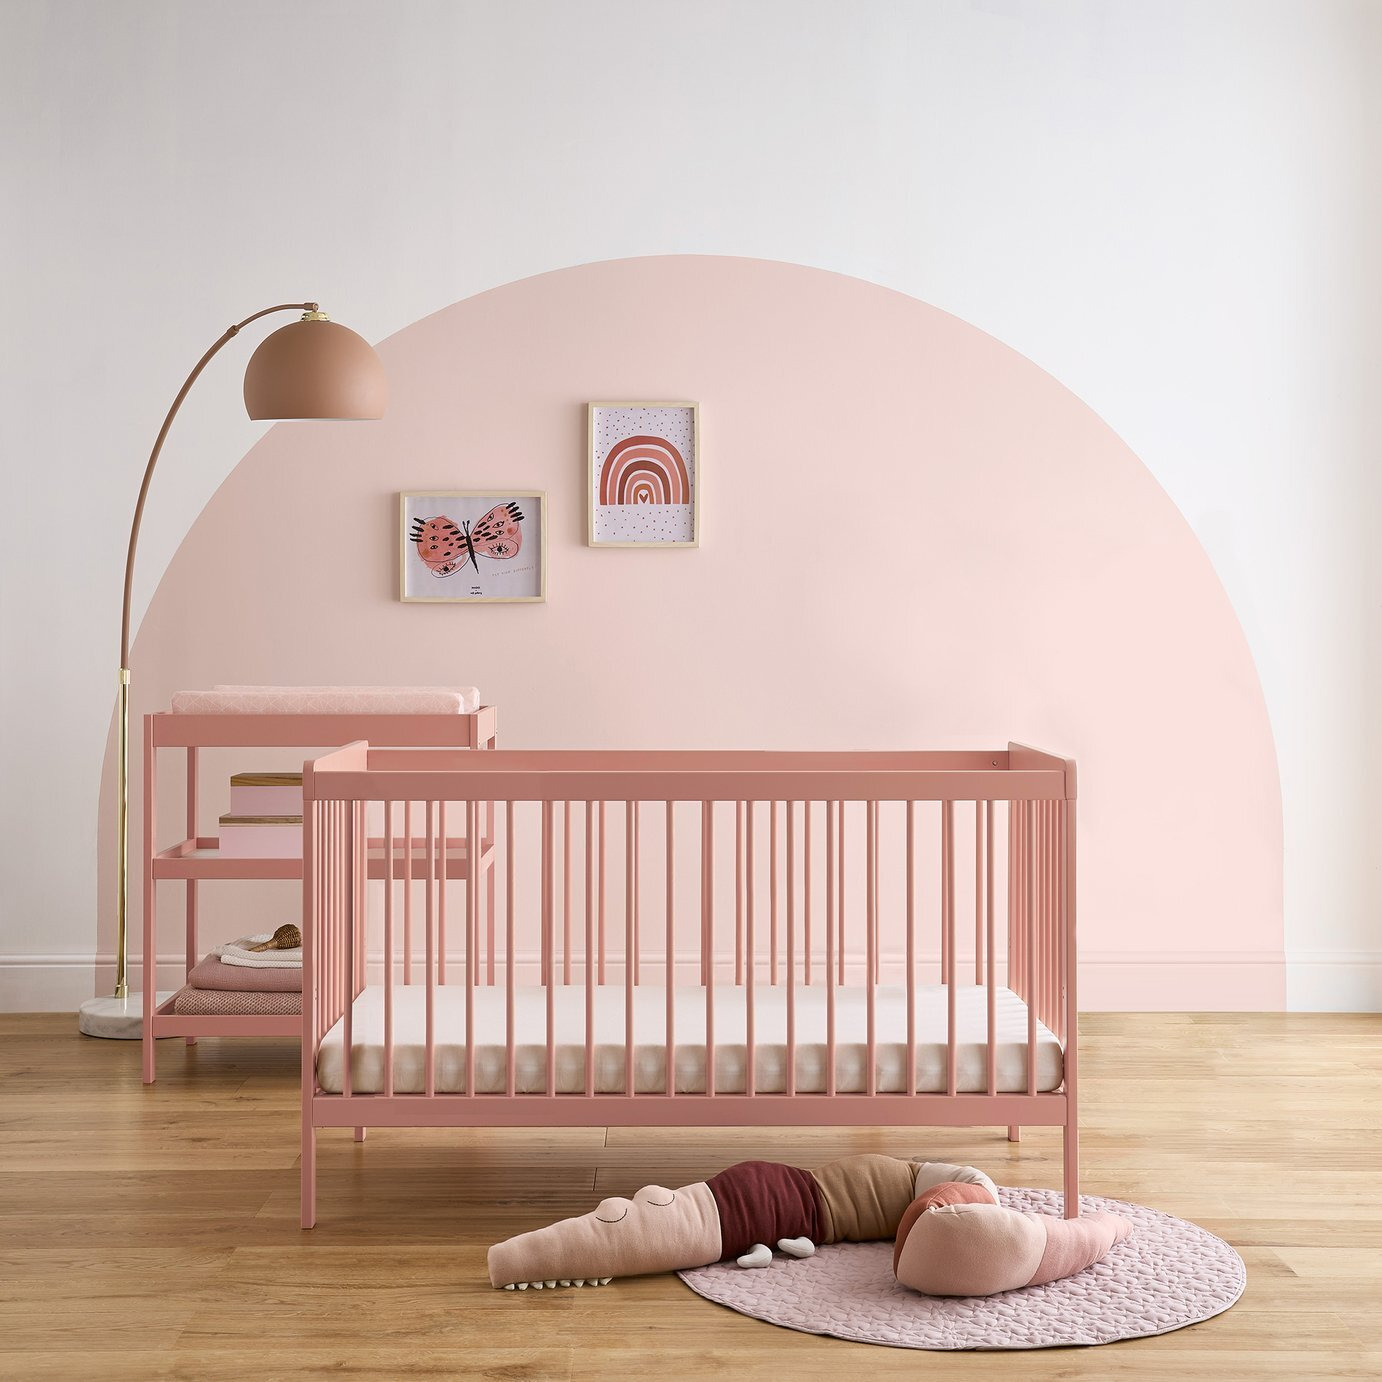 Cuddleco Nola 2 Piece Nursery Furniture Set - Pink - image 1